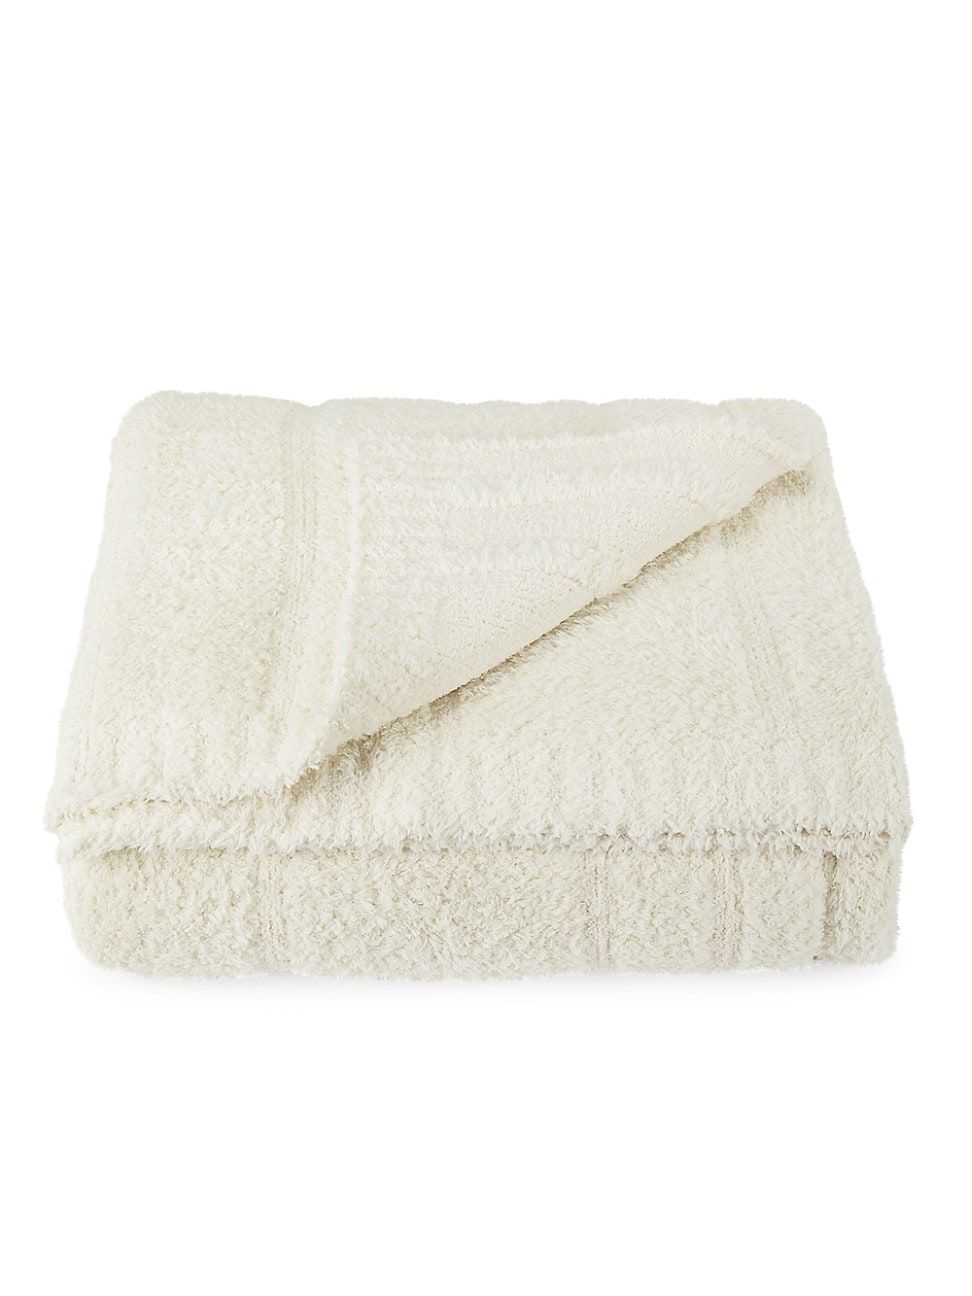 CozyChic Plush Blanket - Cream | Saks Fifth Avenue